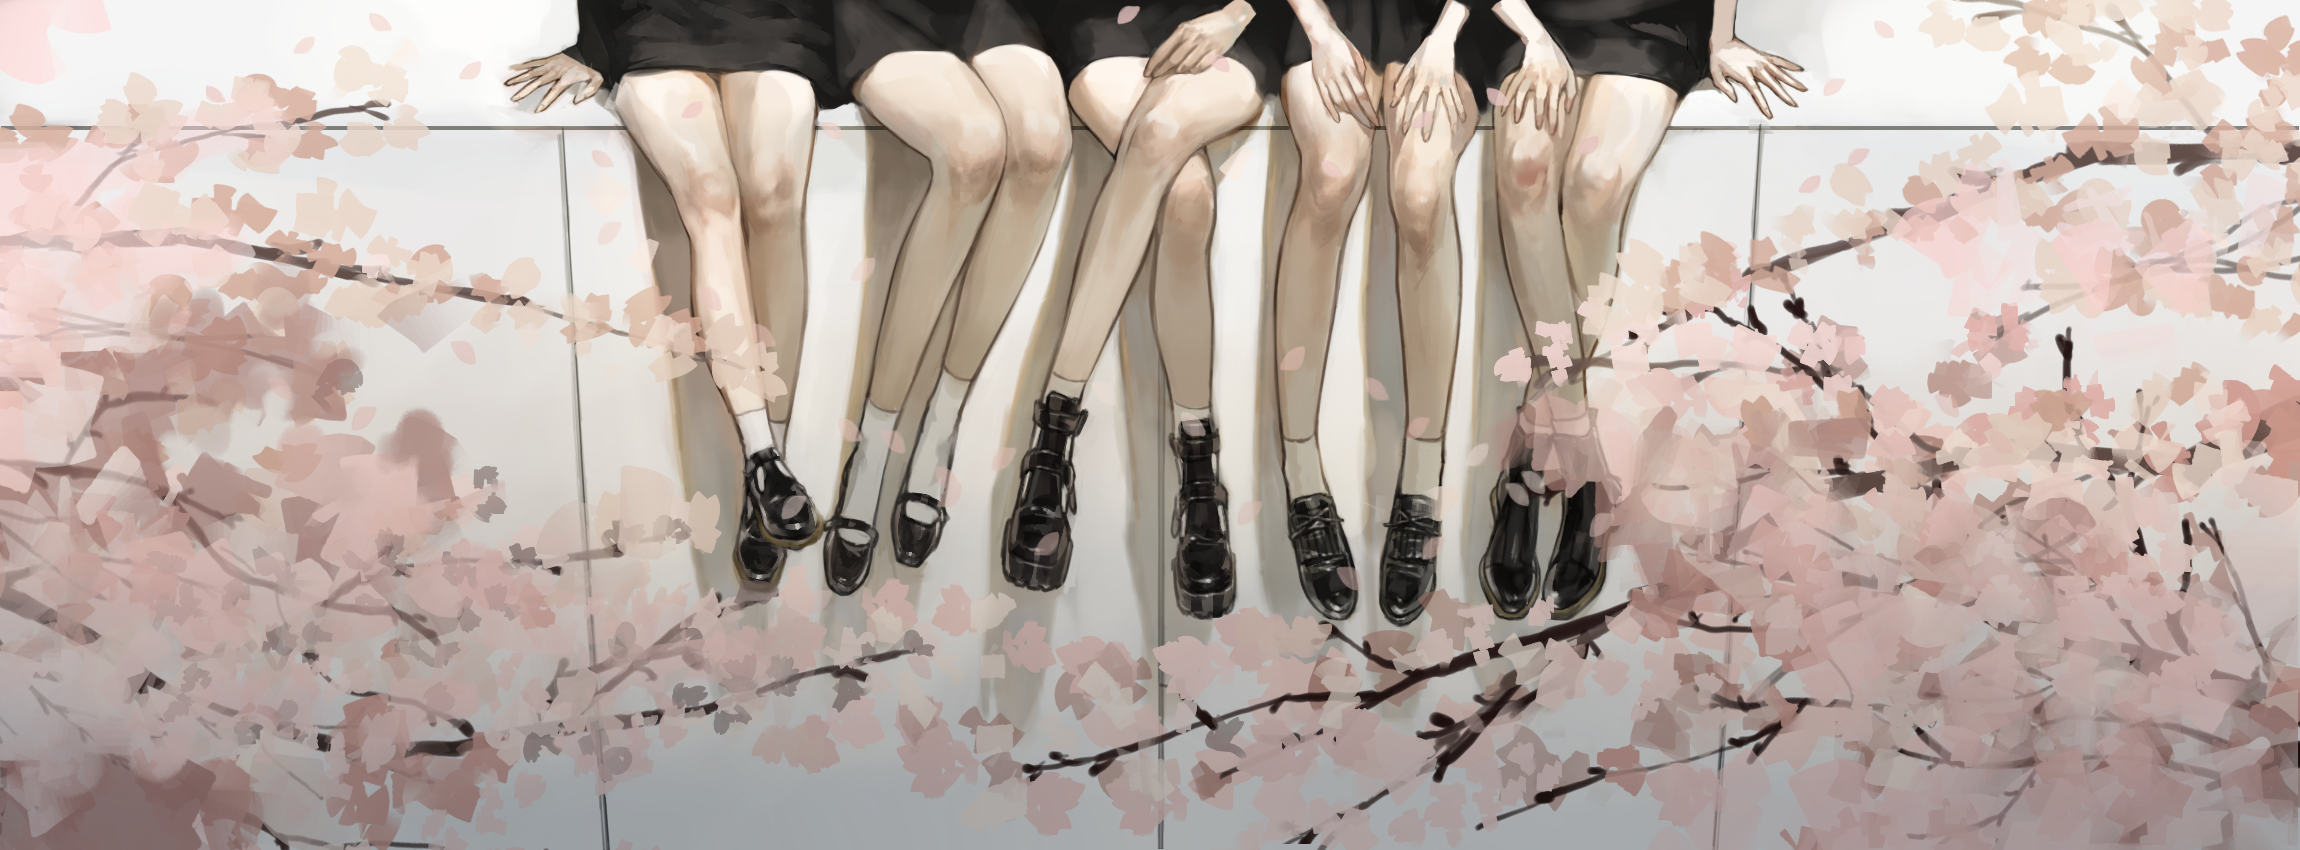 Anime Anime Girls Sakura Tree Boots Socks Sitting 2300x850